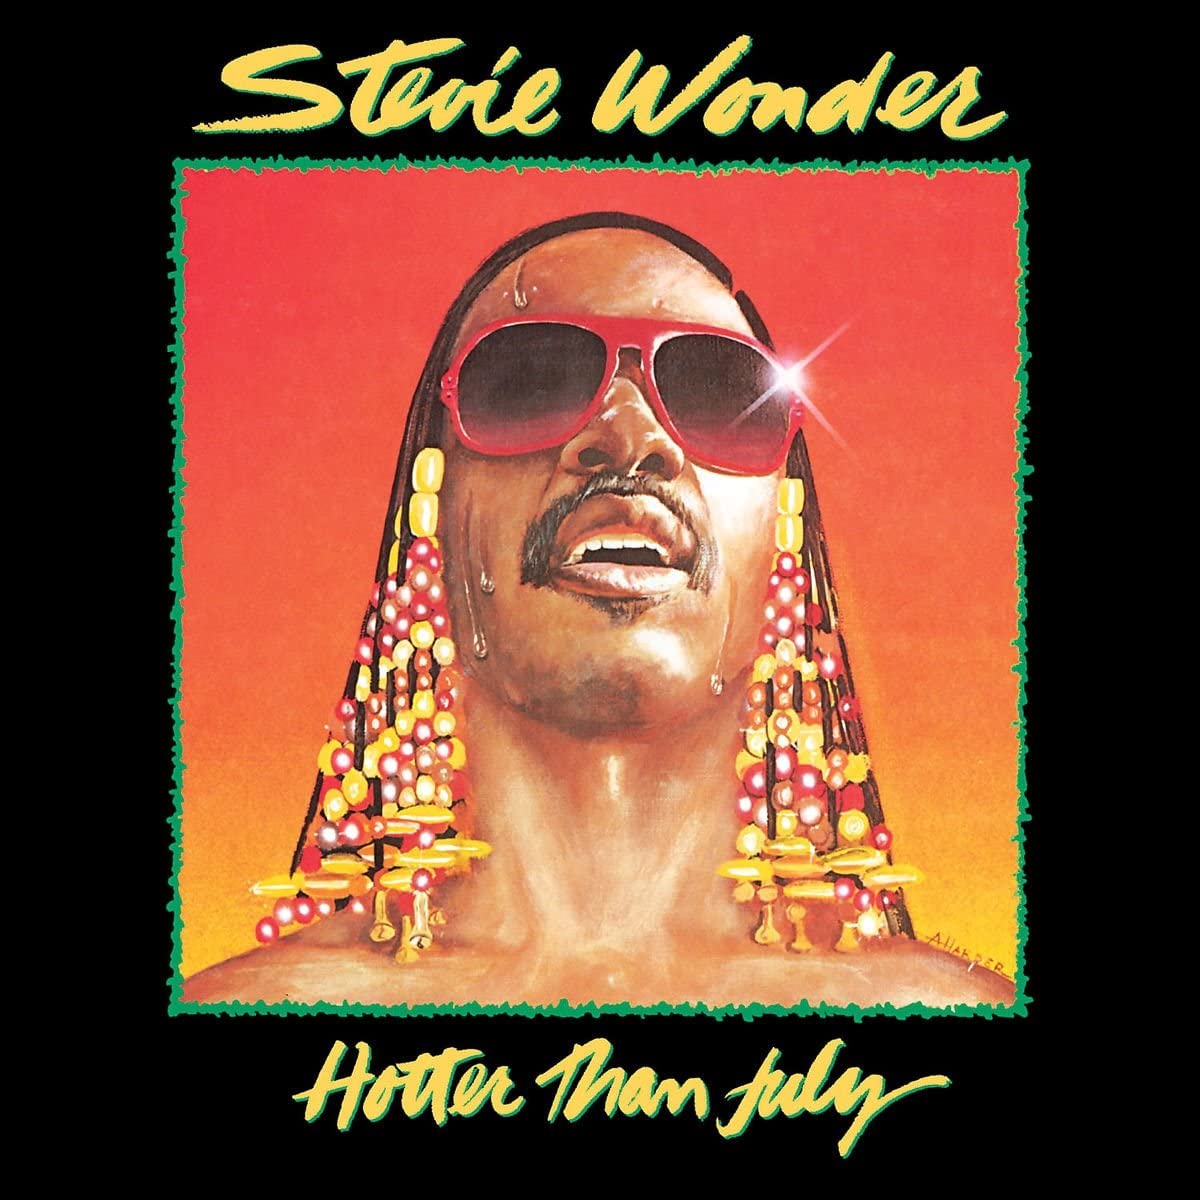 Wonder, Stevie/Hotter Than July [LP]